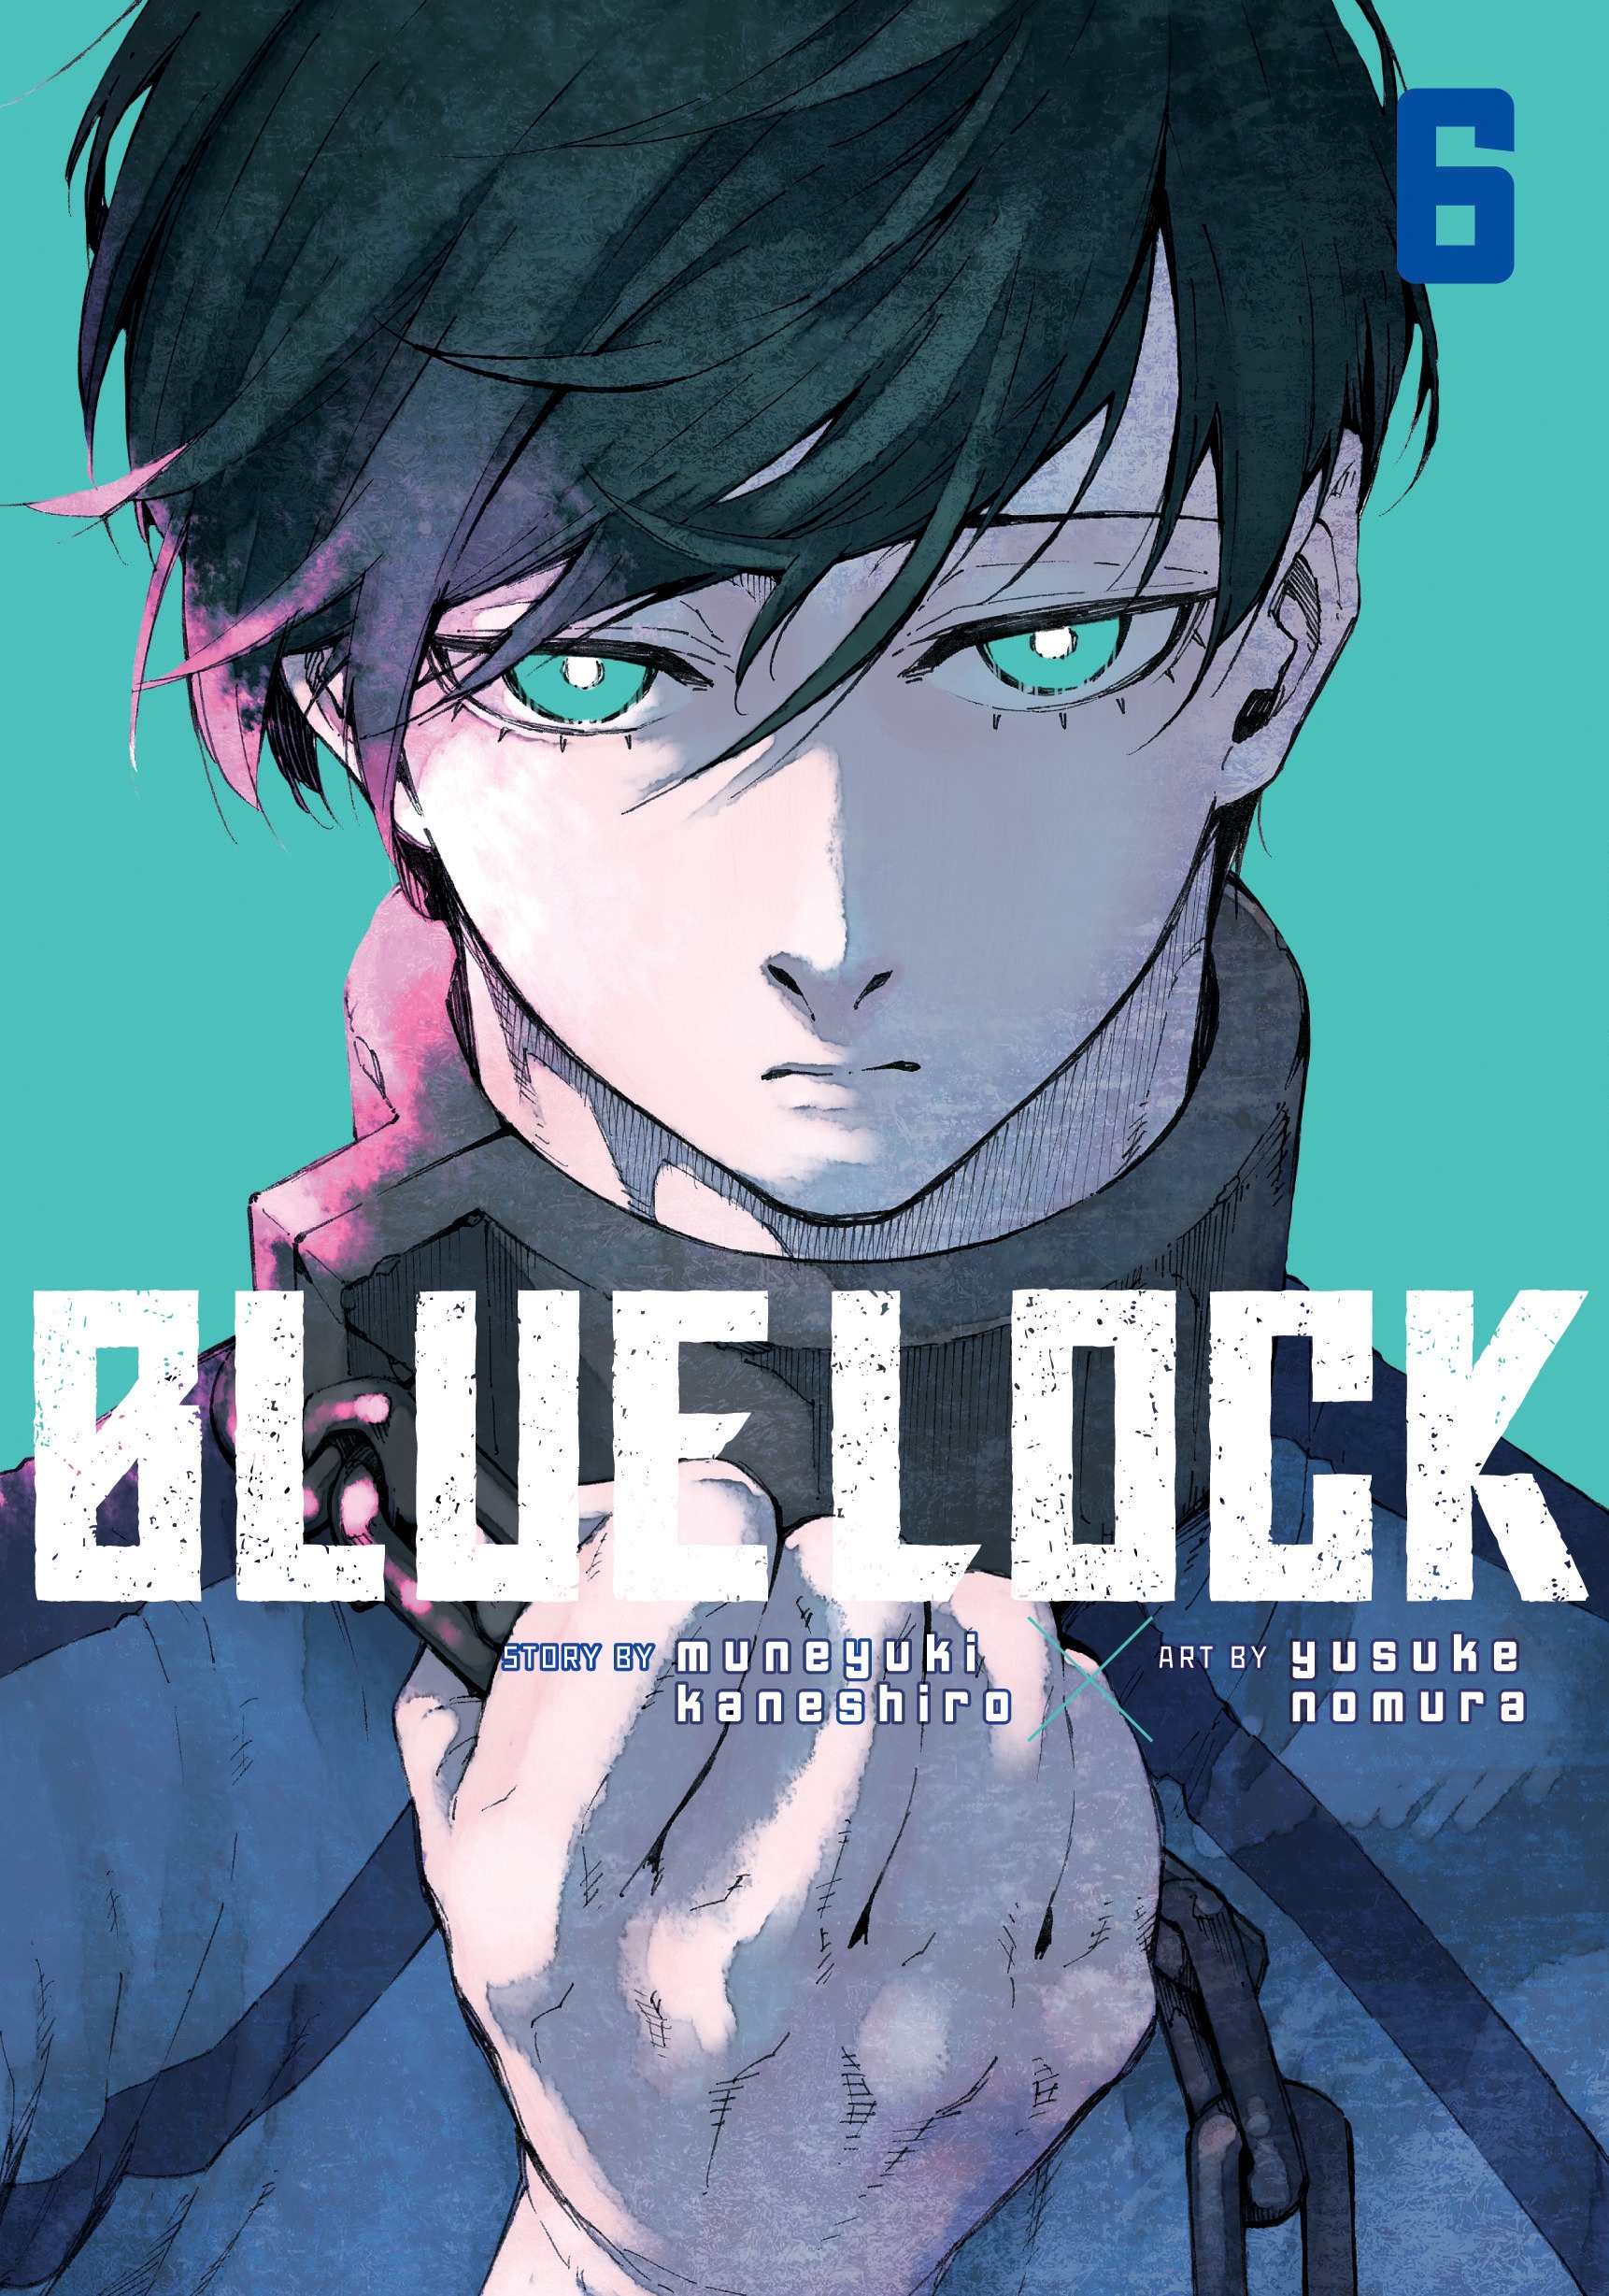 Blue Lock】The Manga Artist Behind the Stories 